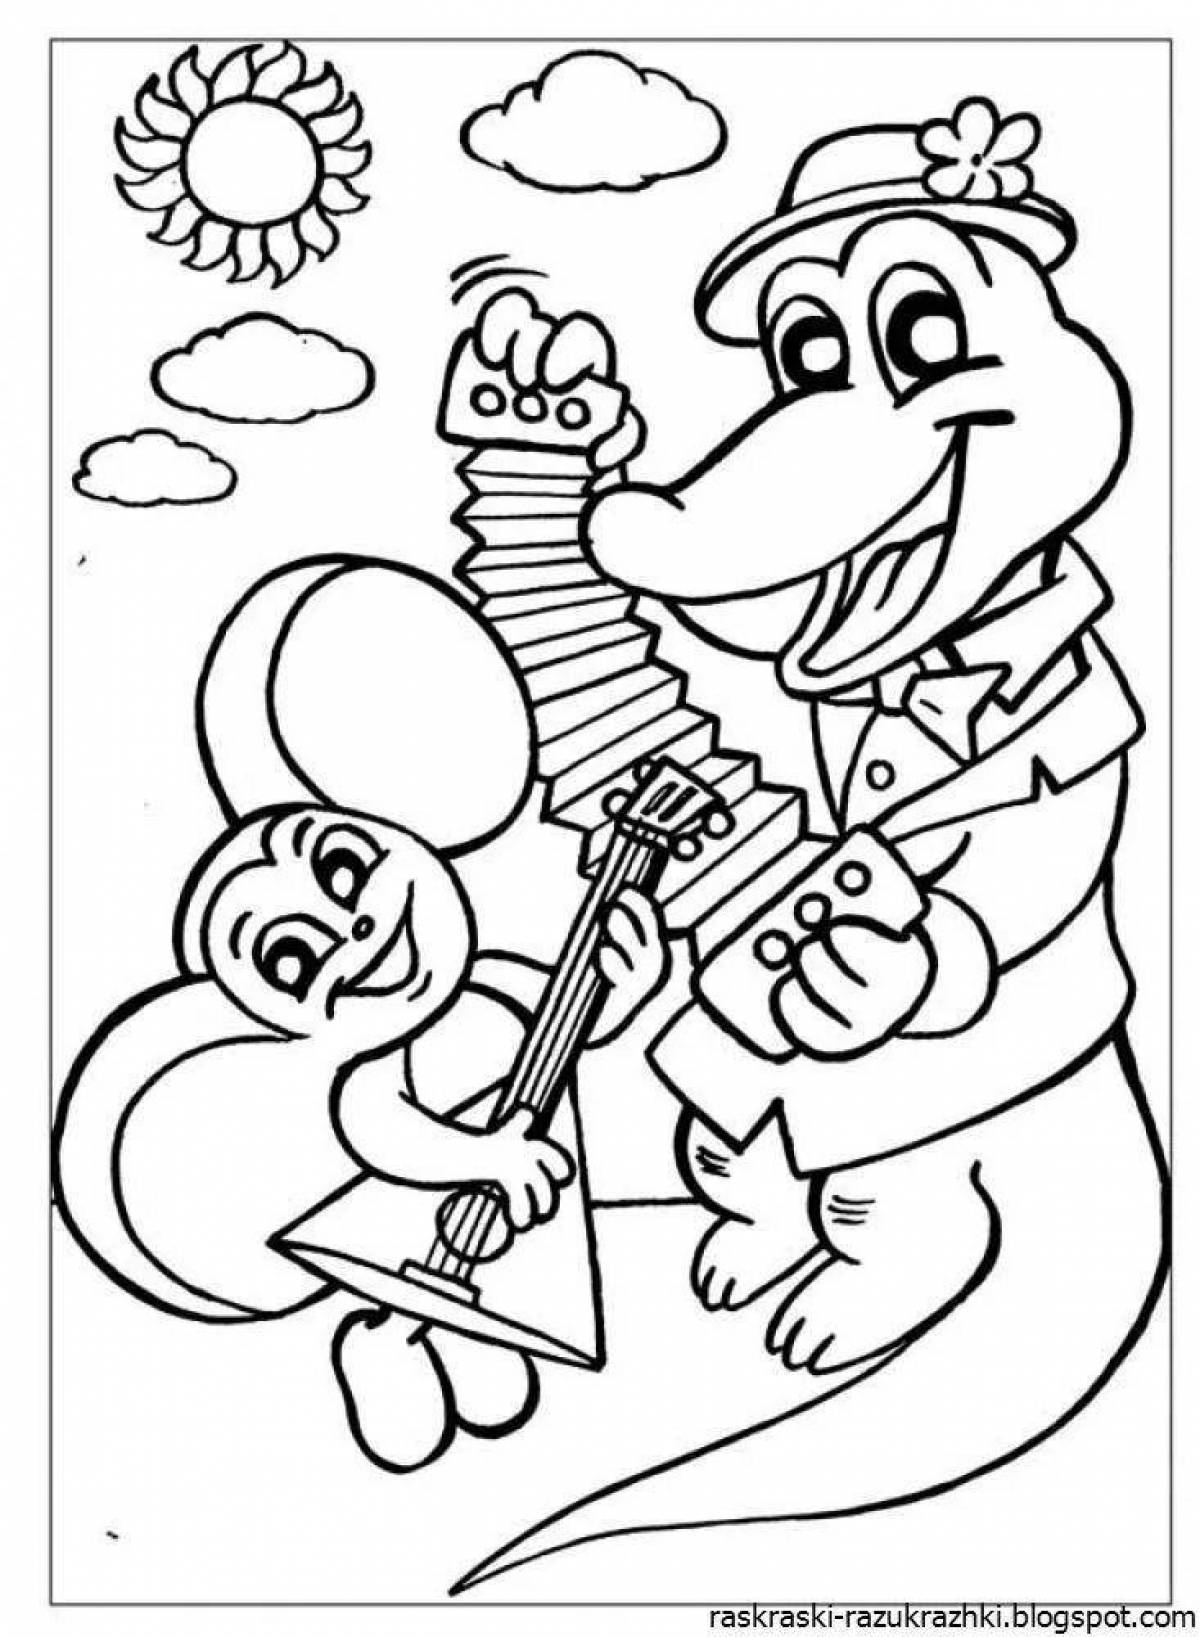 Children coloring crocodile gena for kids